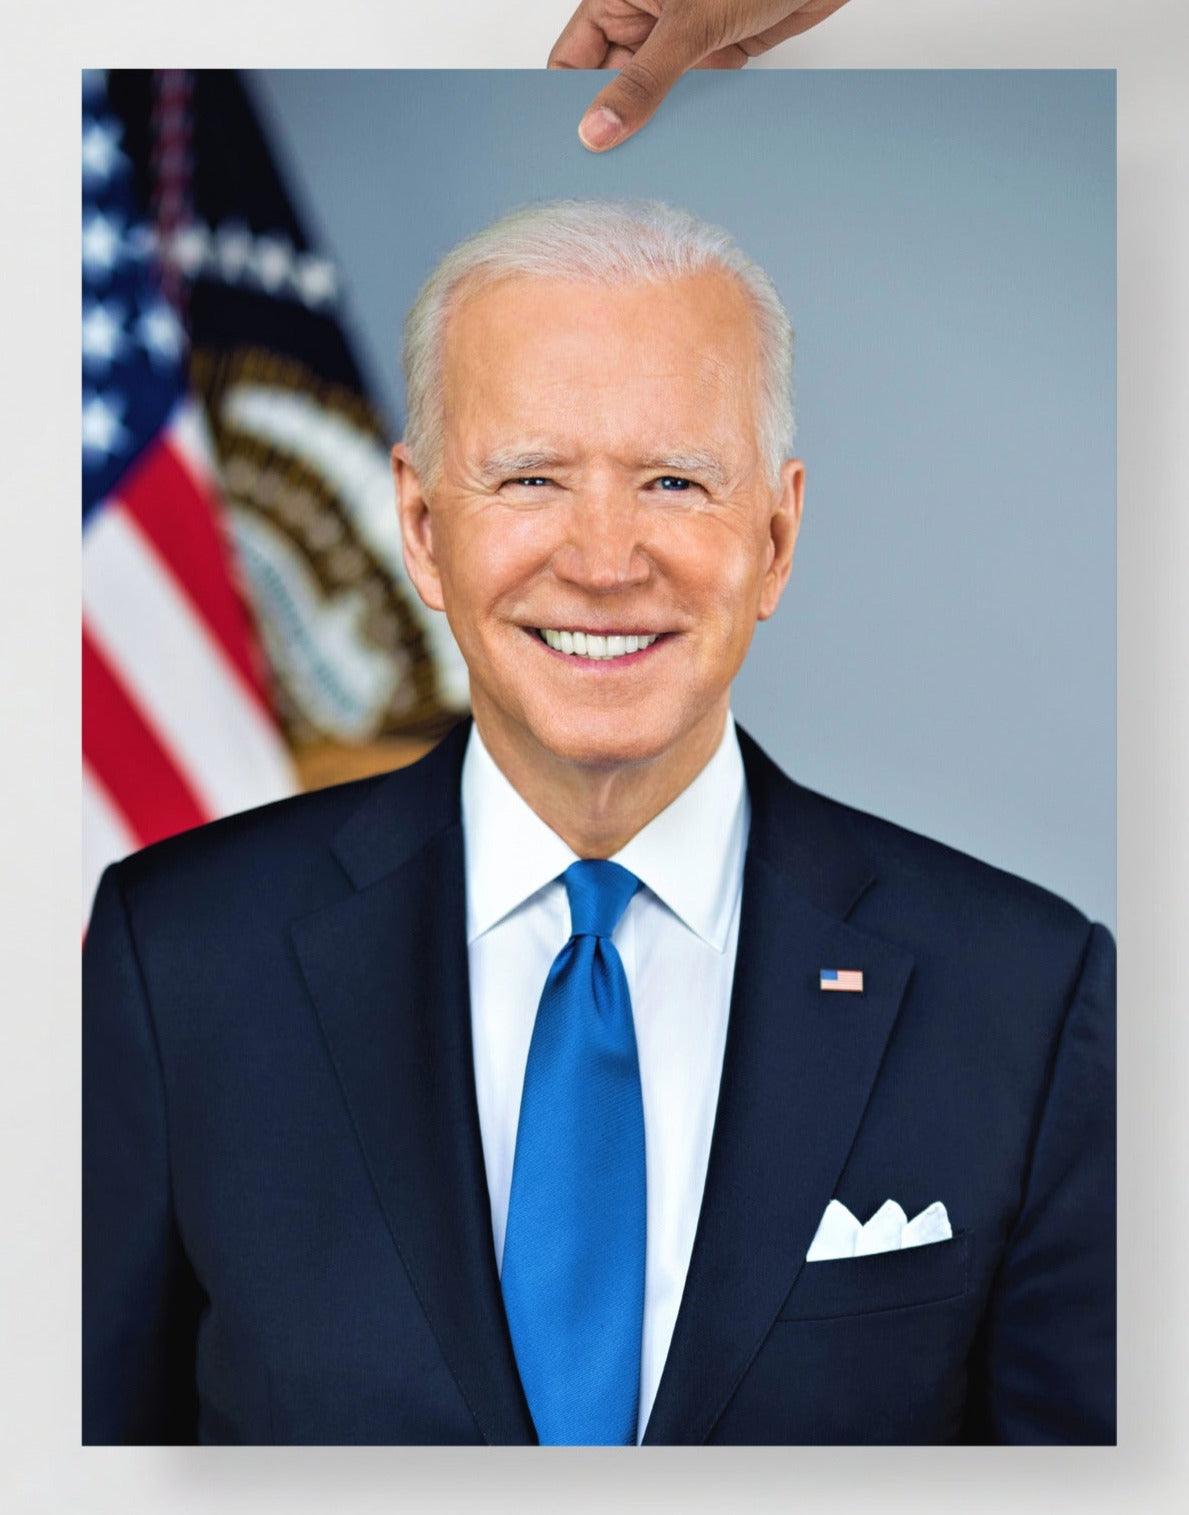 A Joe Biden Official Portrait poster on a plain backdrop in size 18x24”.